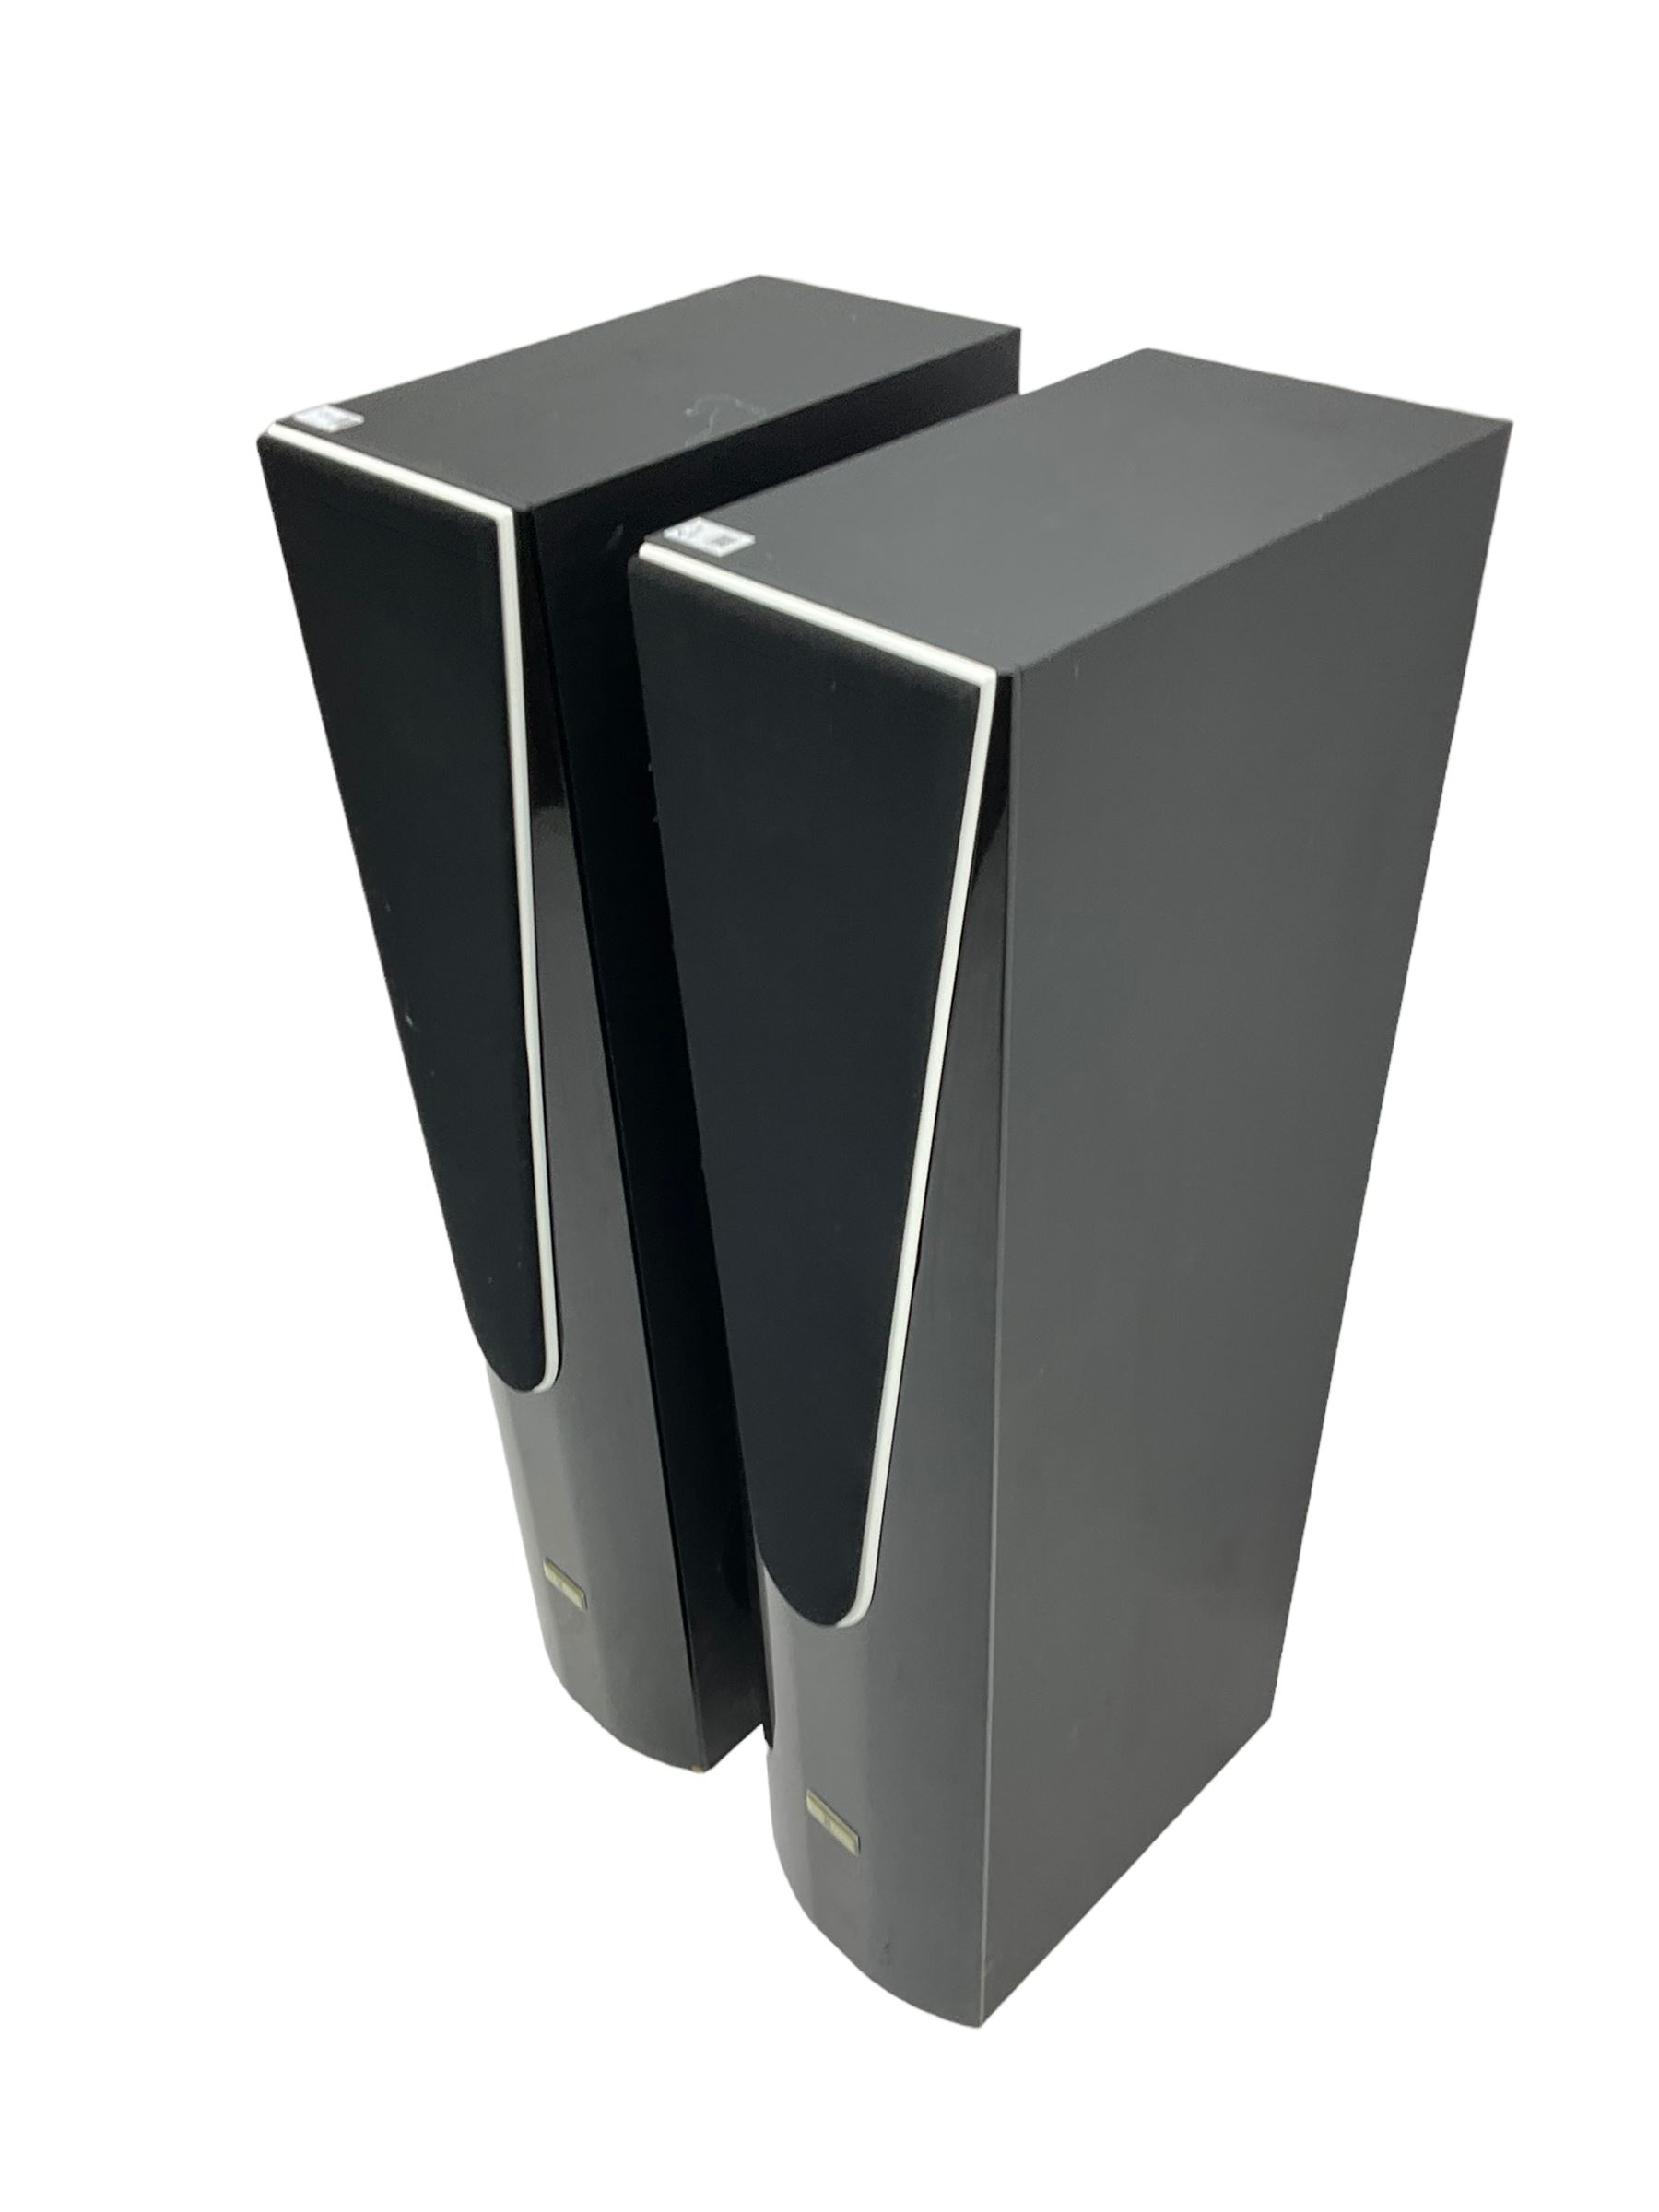 Pair Lake Audio 120W floorstanding speakers in black finish - Image 3 of 5